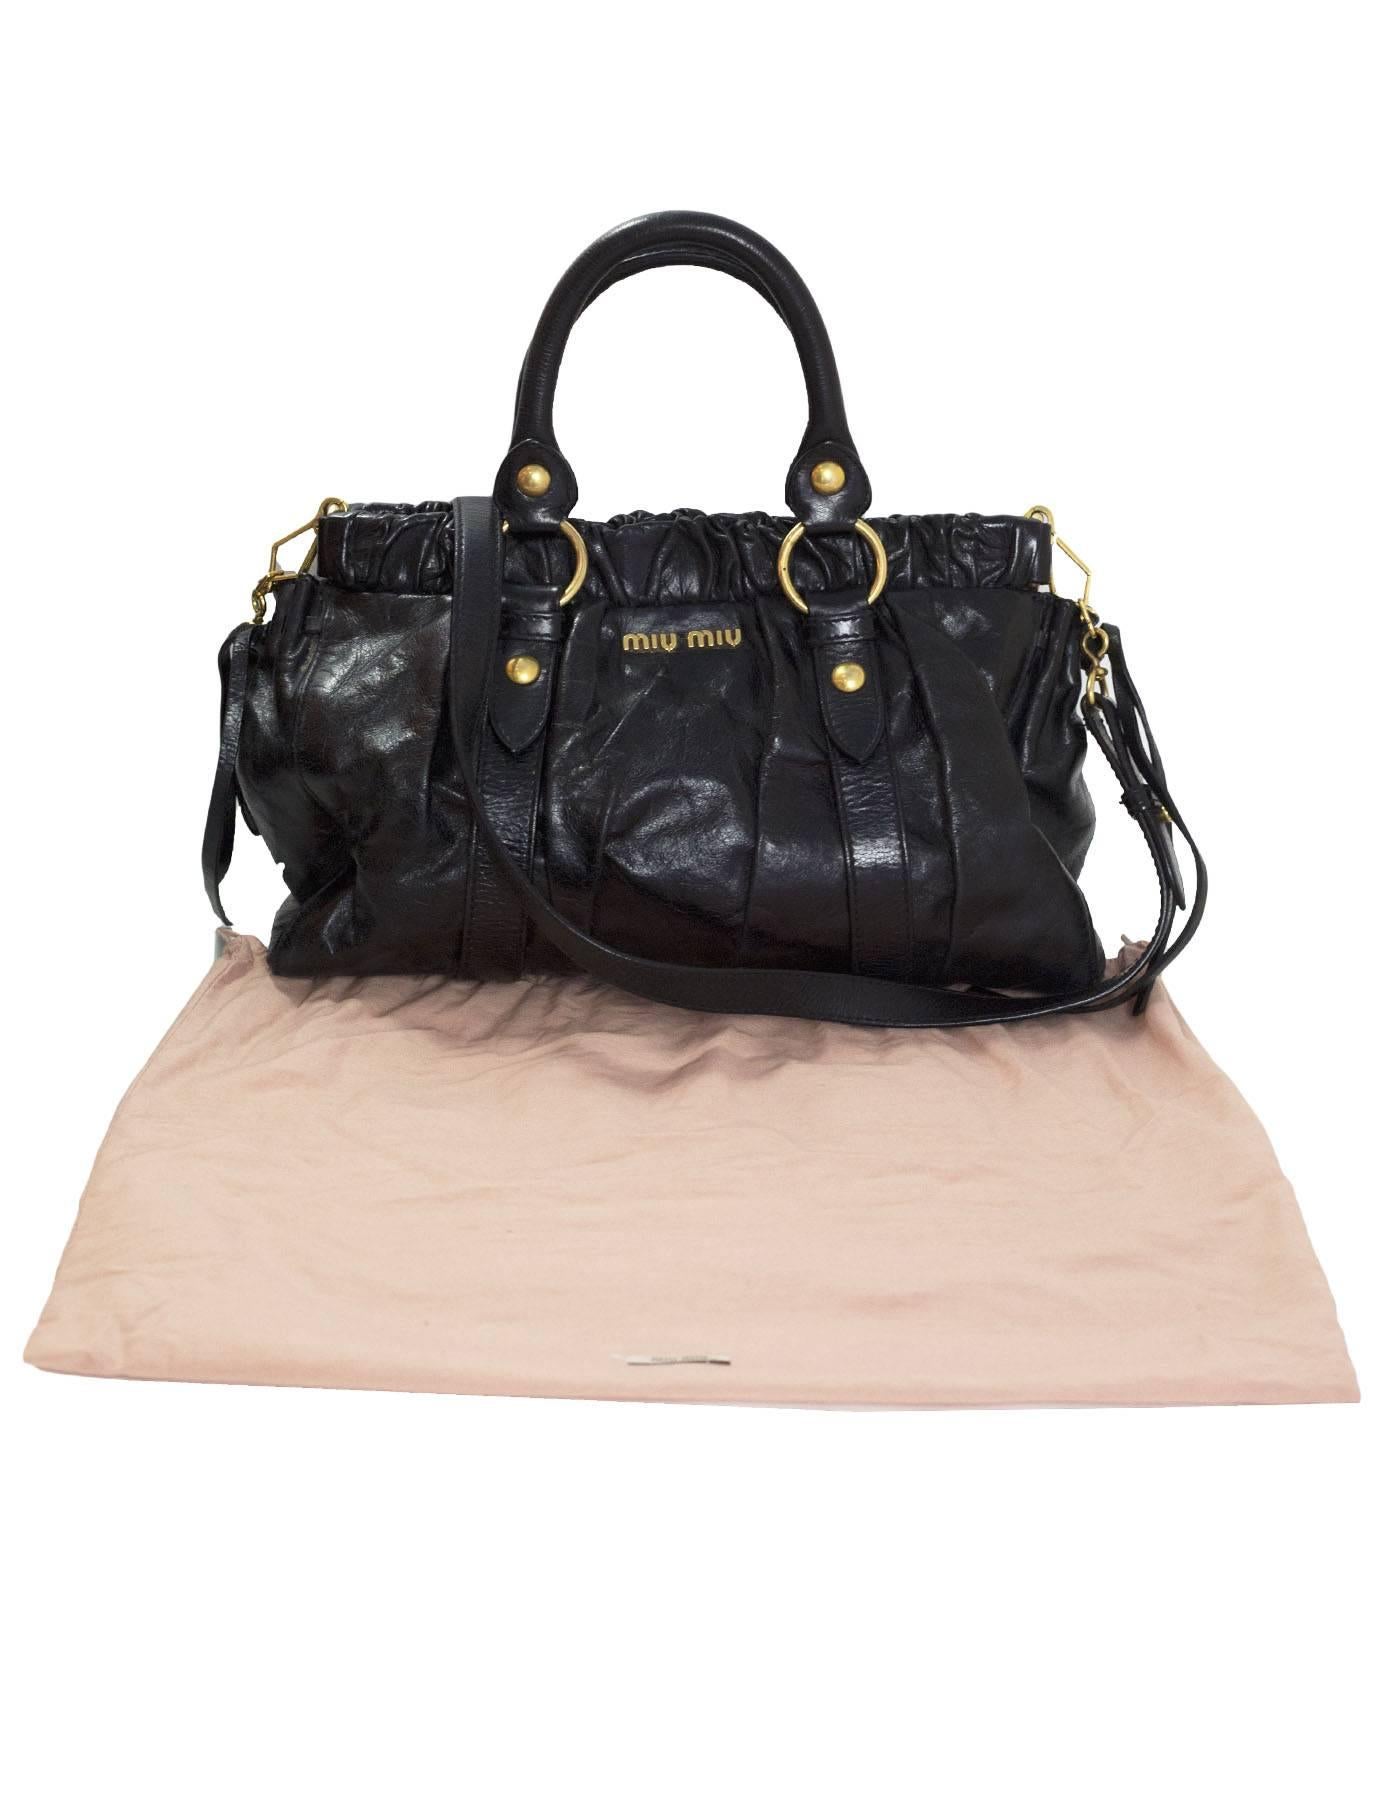 Miu Miu Black Ruched Leather Satchel Bag with DB 6